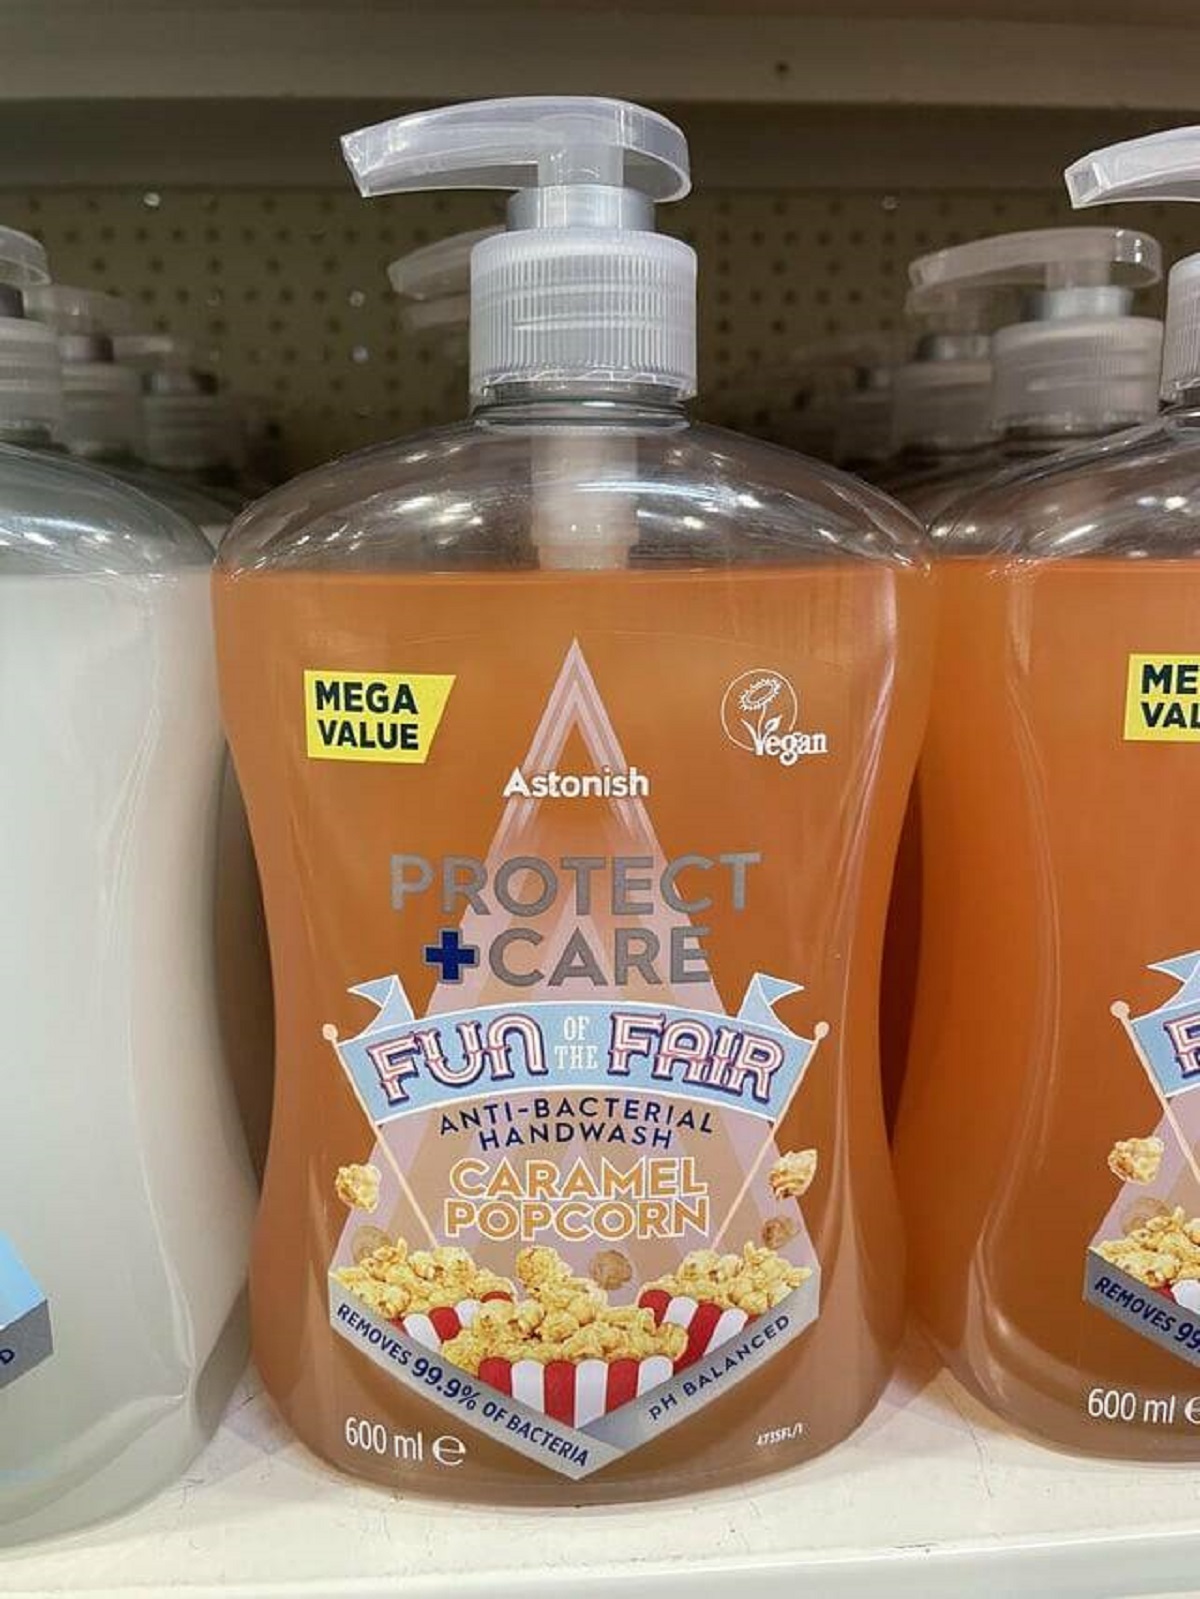 "Caramel Popcorn Handwash"